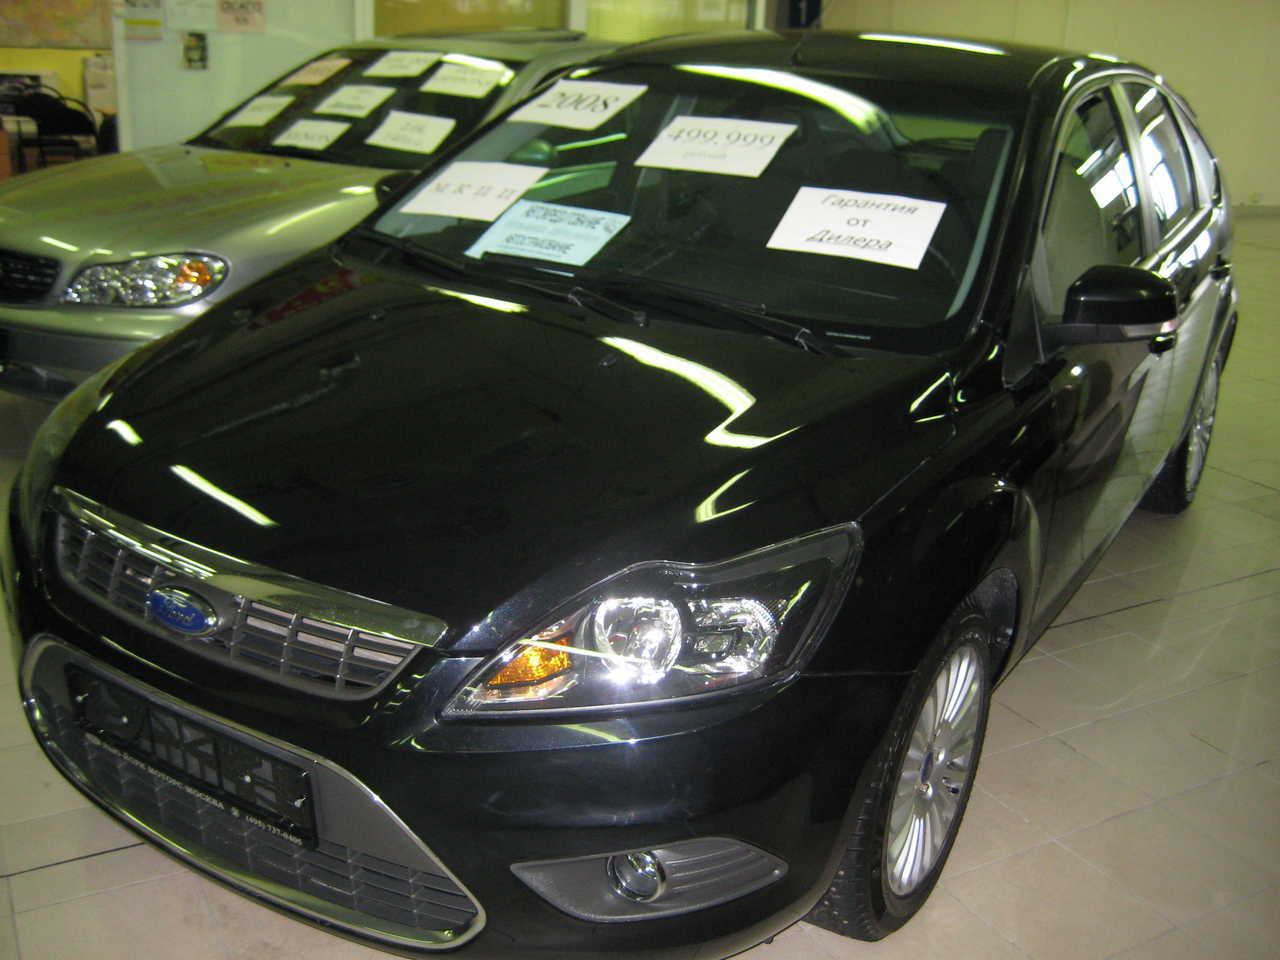 2008 Ford Focus